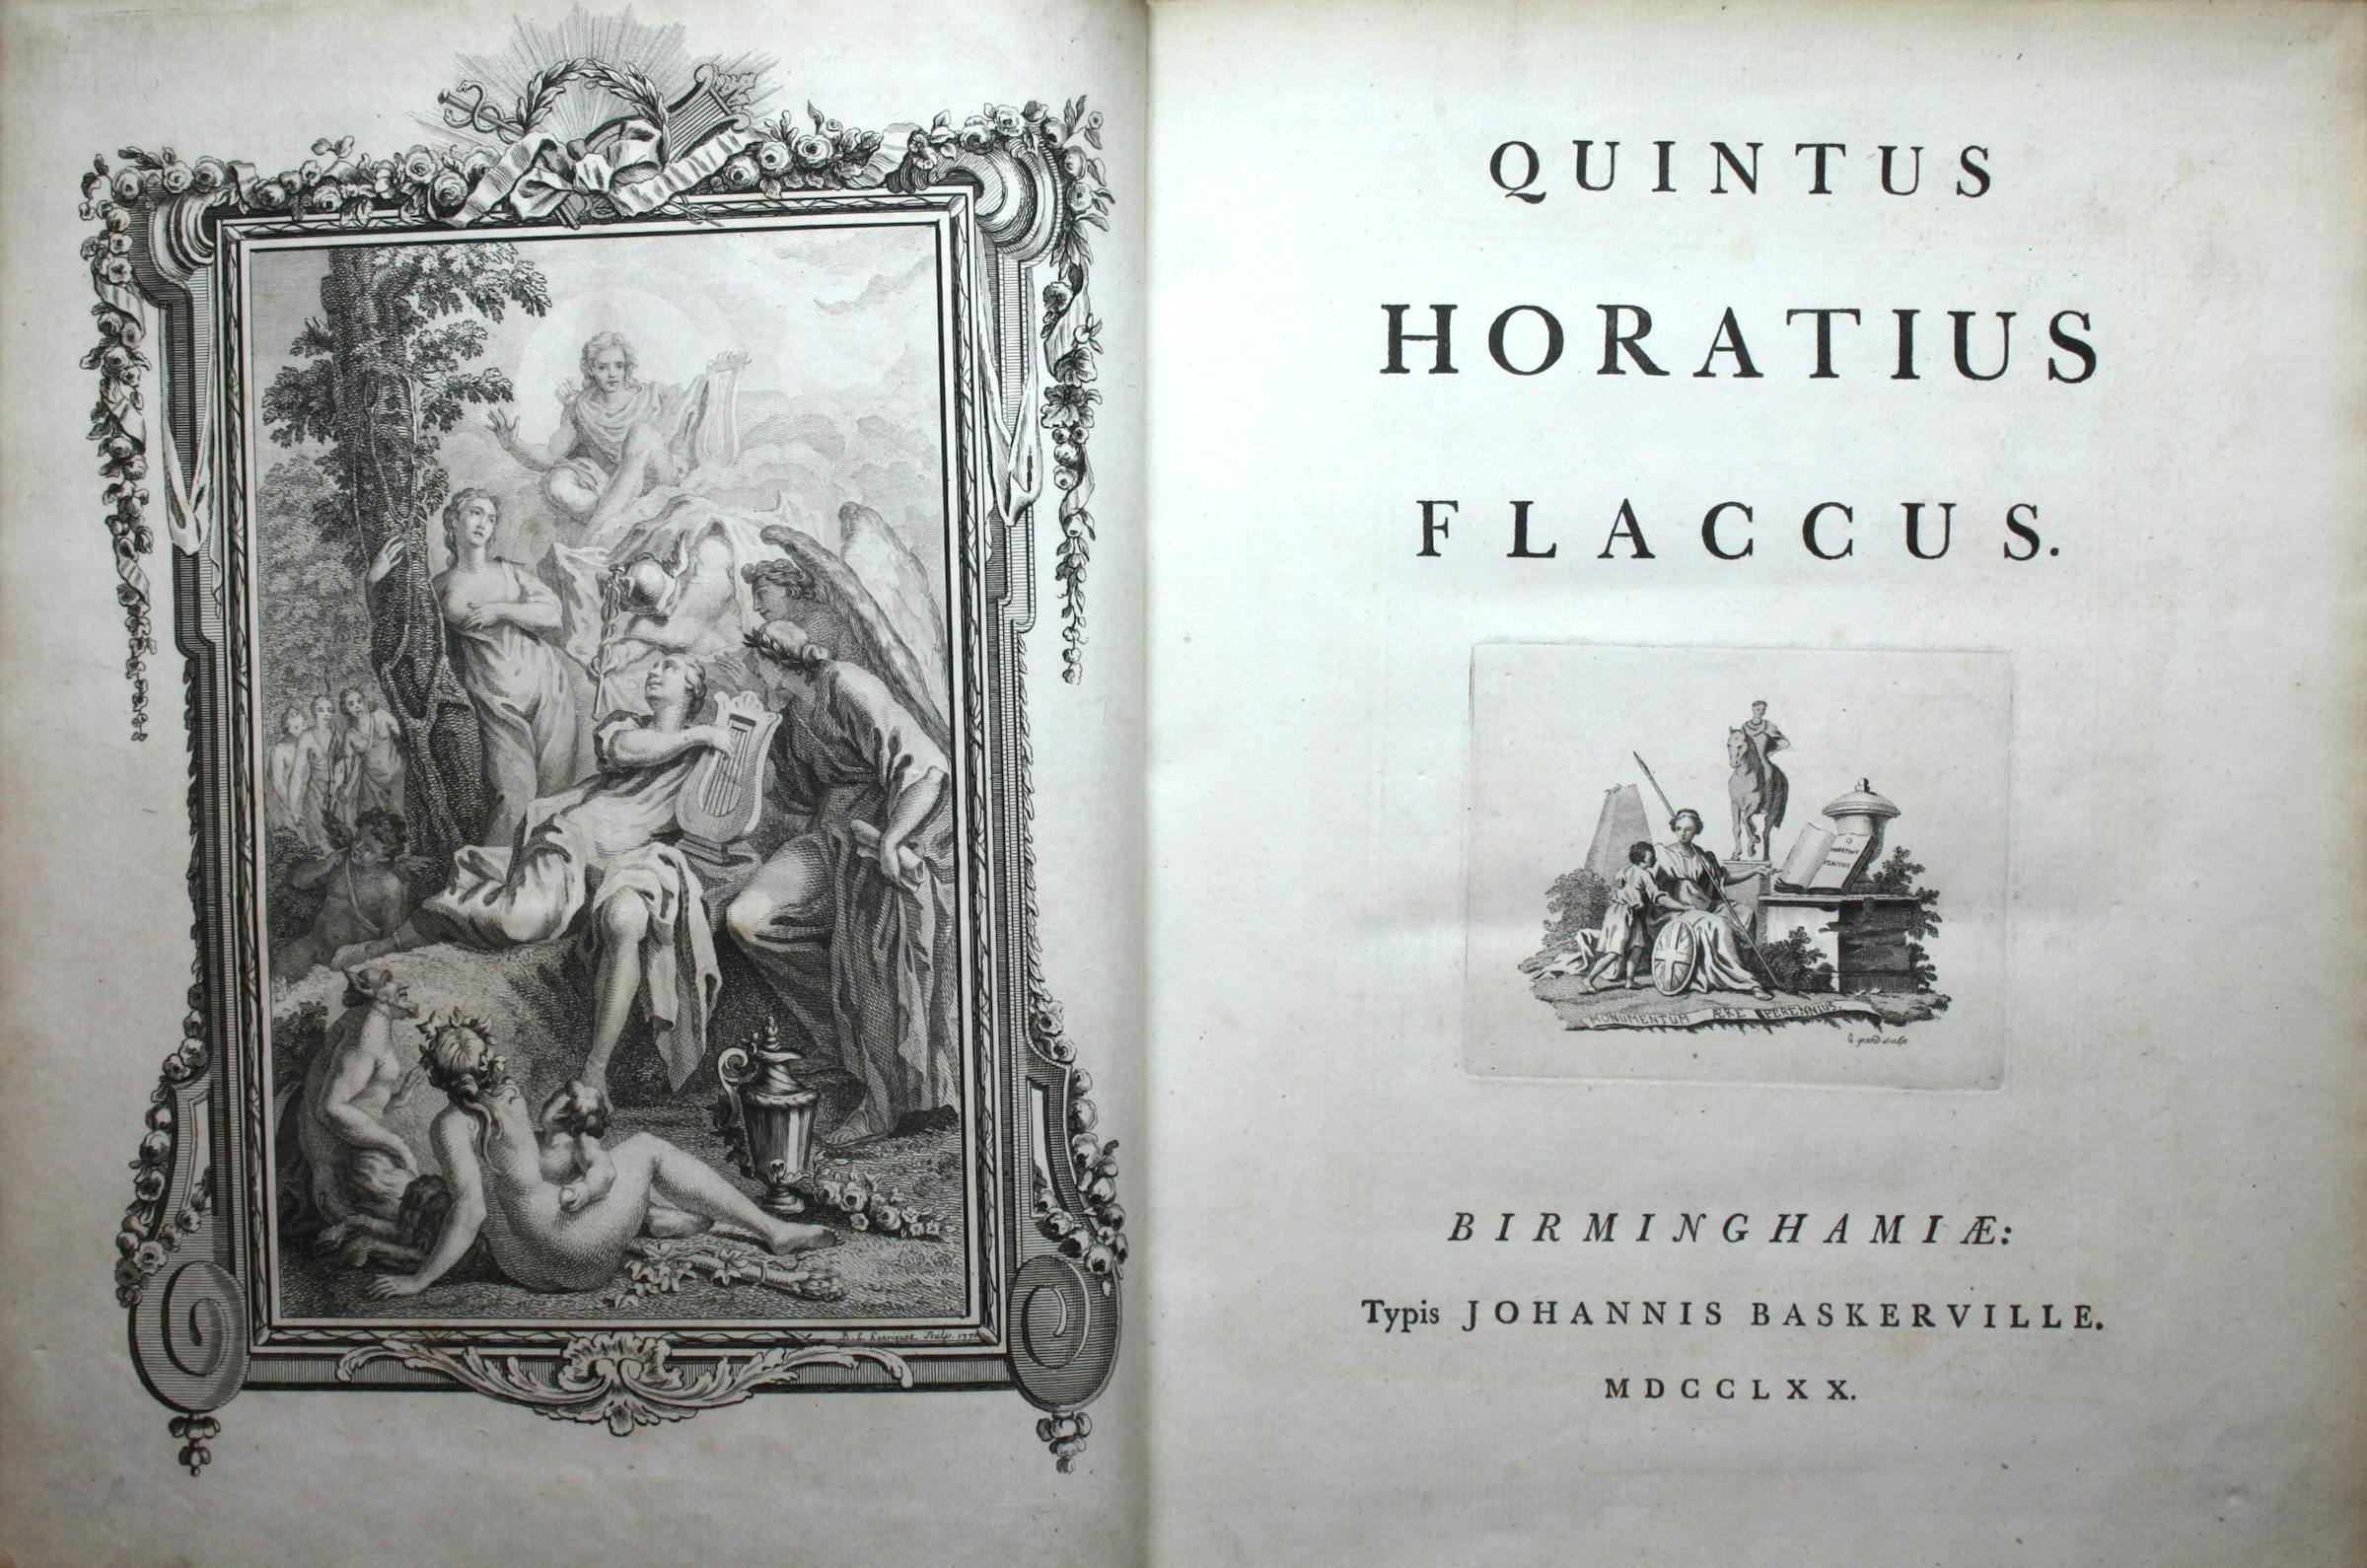 Baskervillle, Quintis Horatius Flaccus [Horace], 1770.